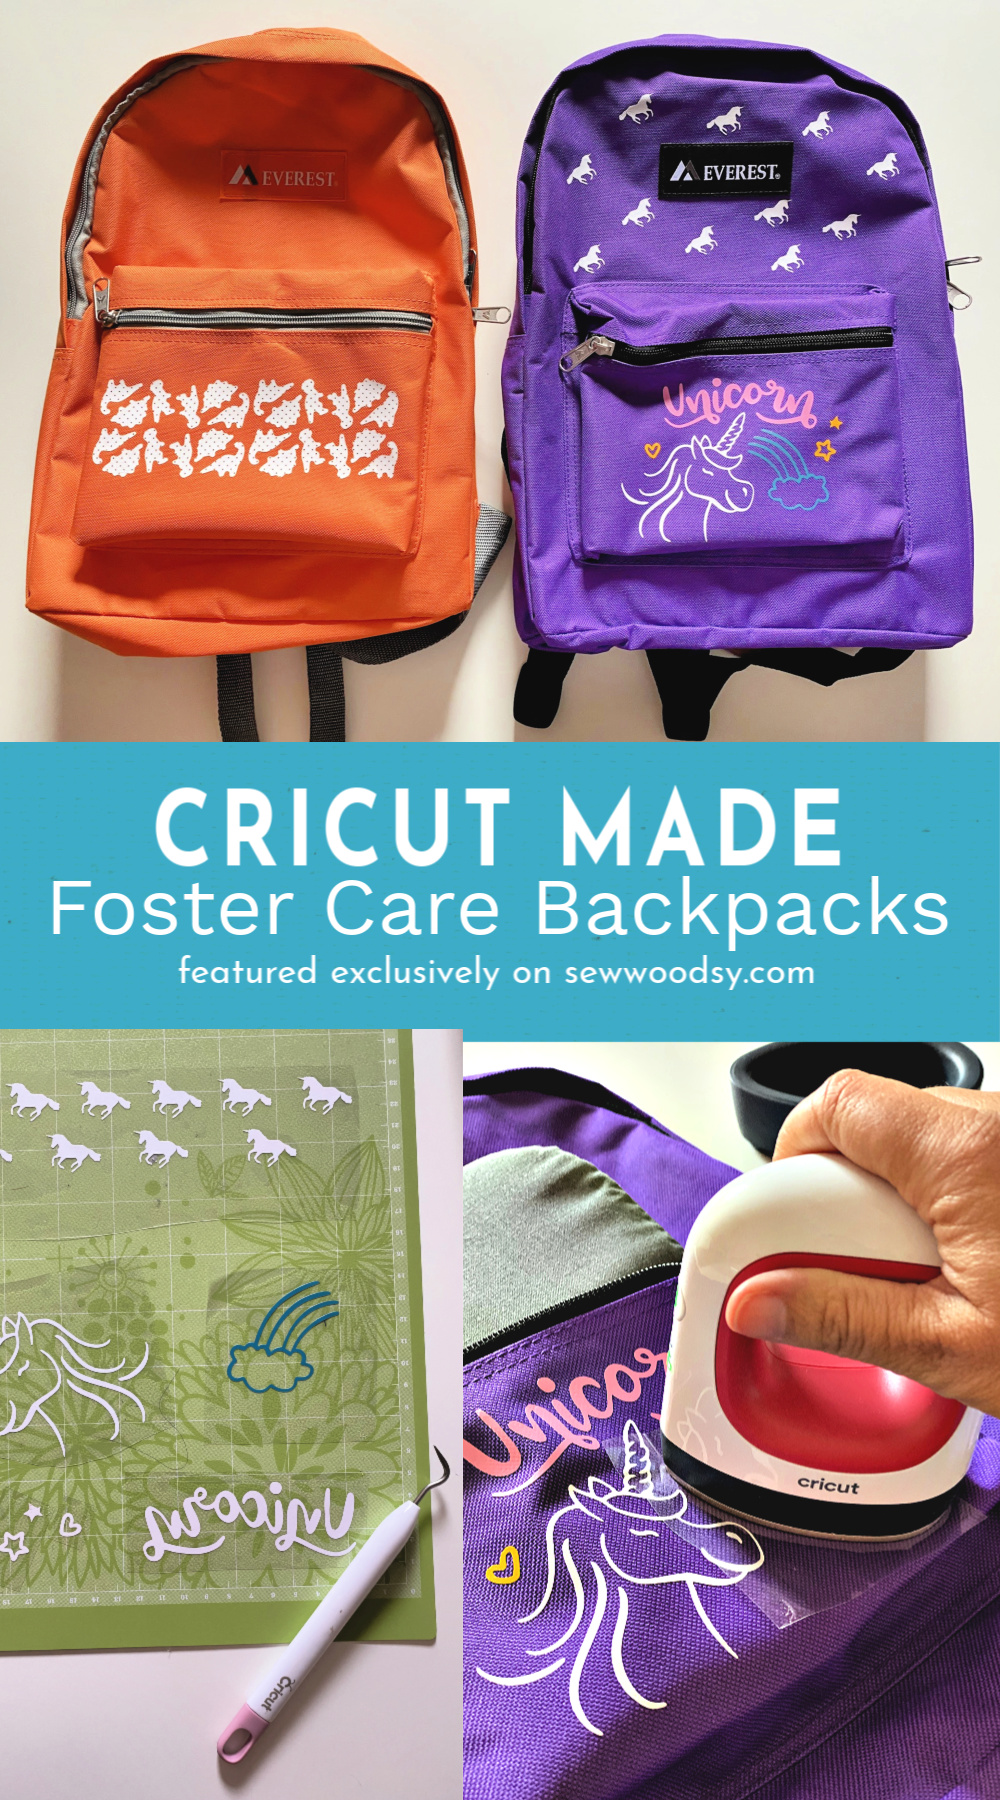 Circut Made - Foster Care Backpacks #cricutcause